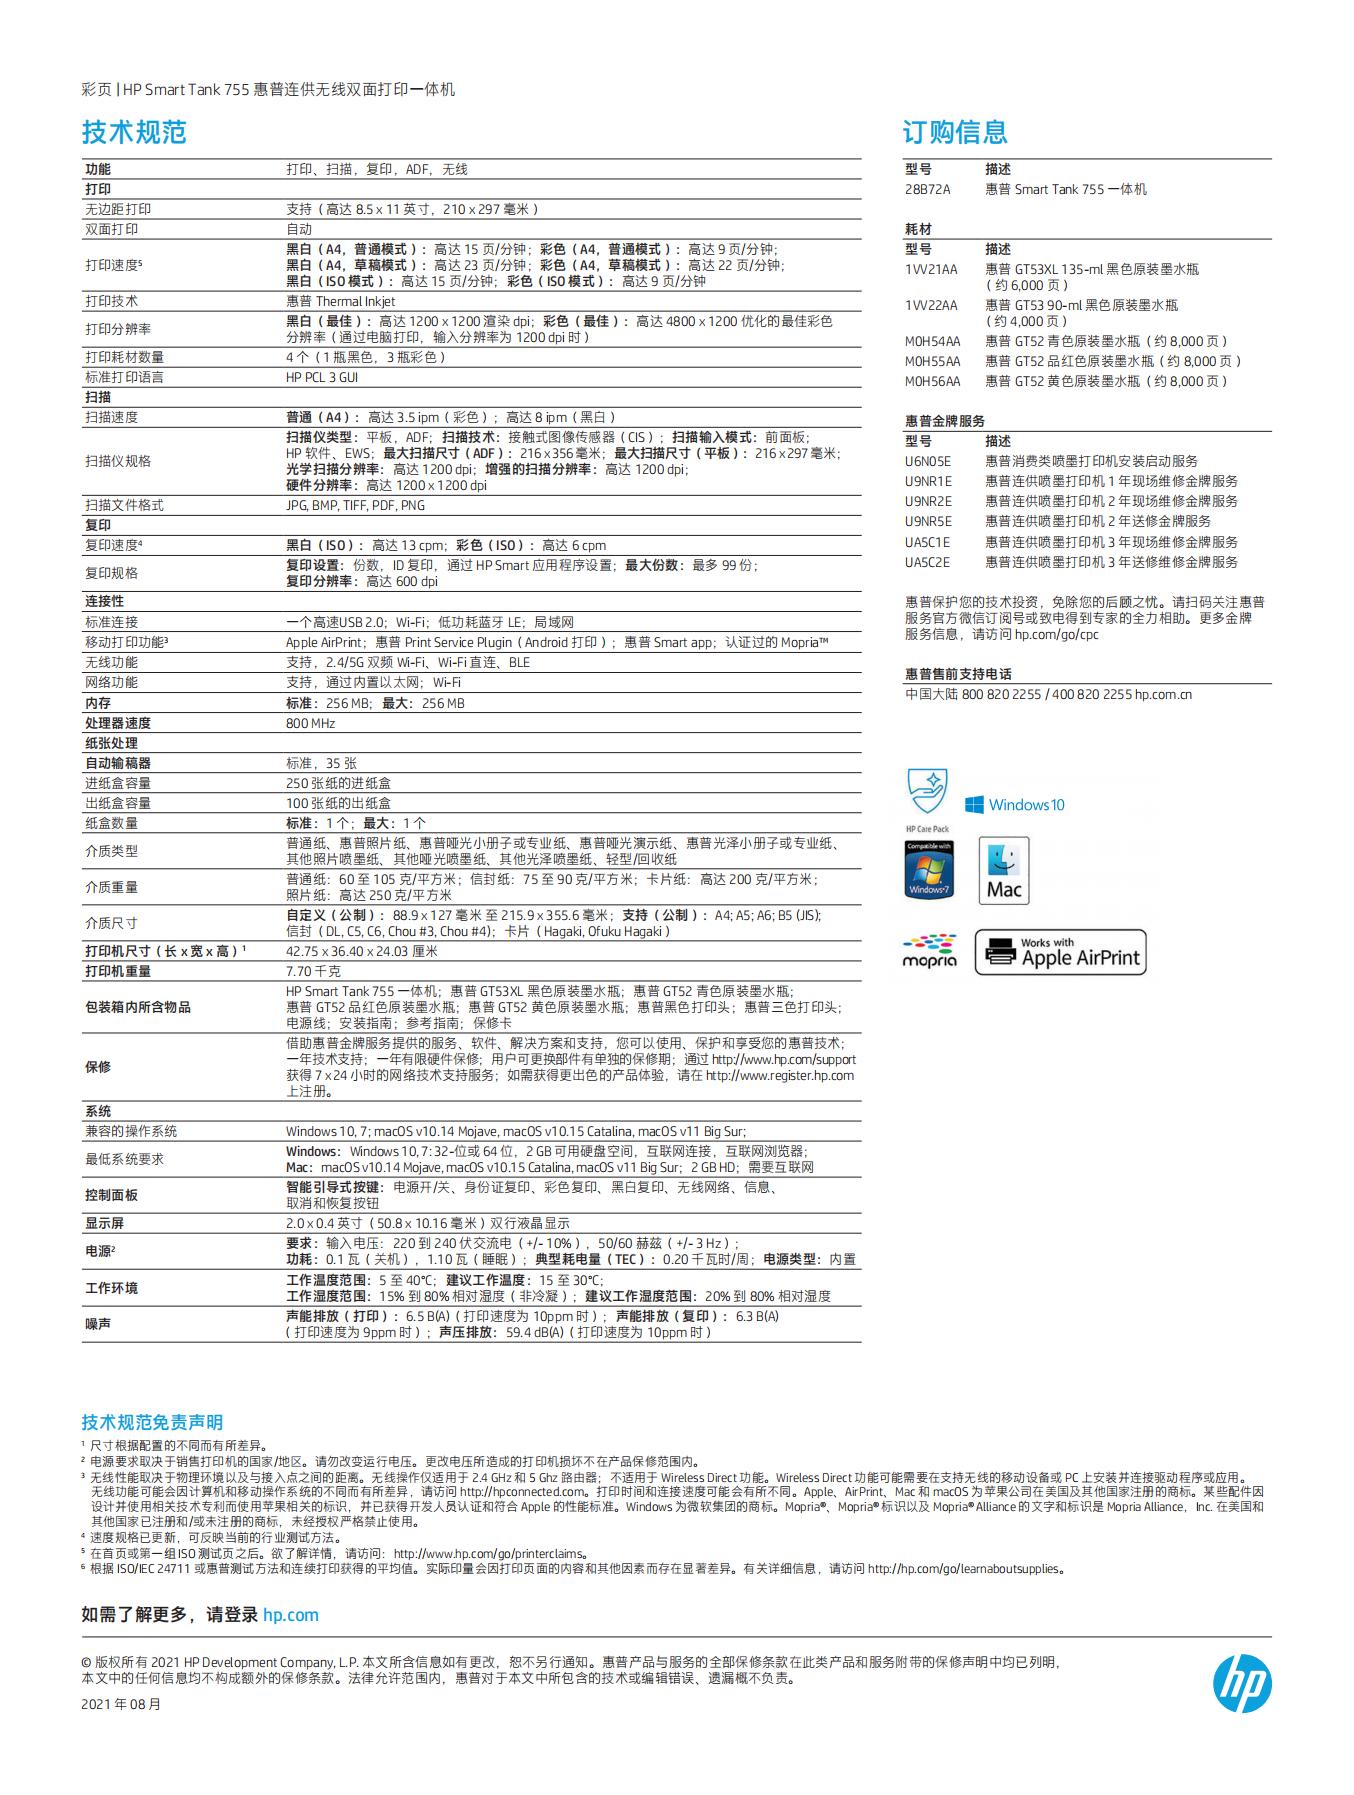 HP Tank755 产品彩页_01.jpg